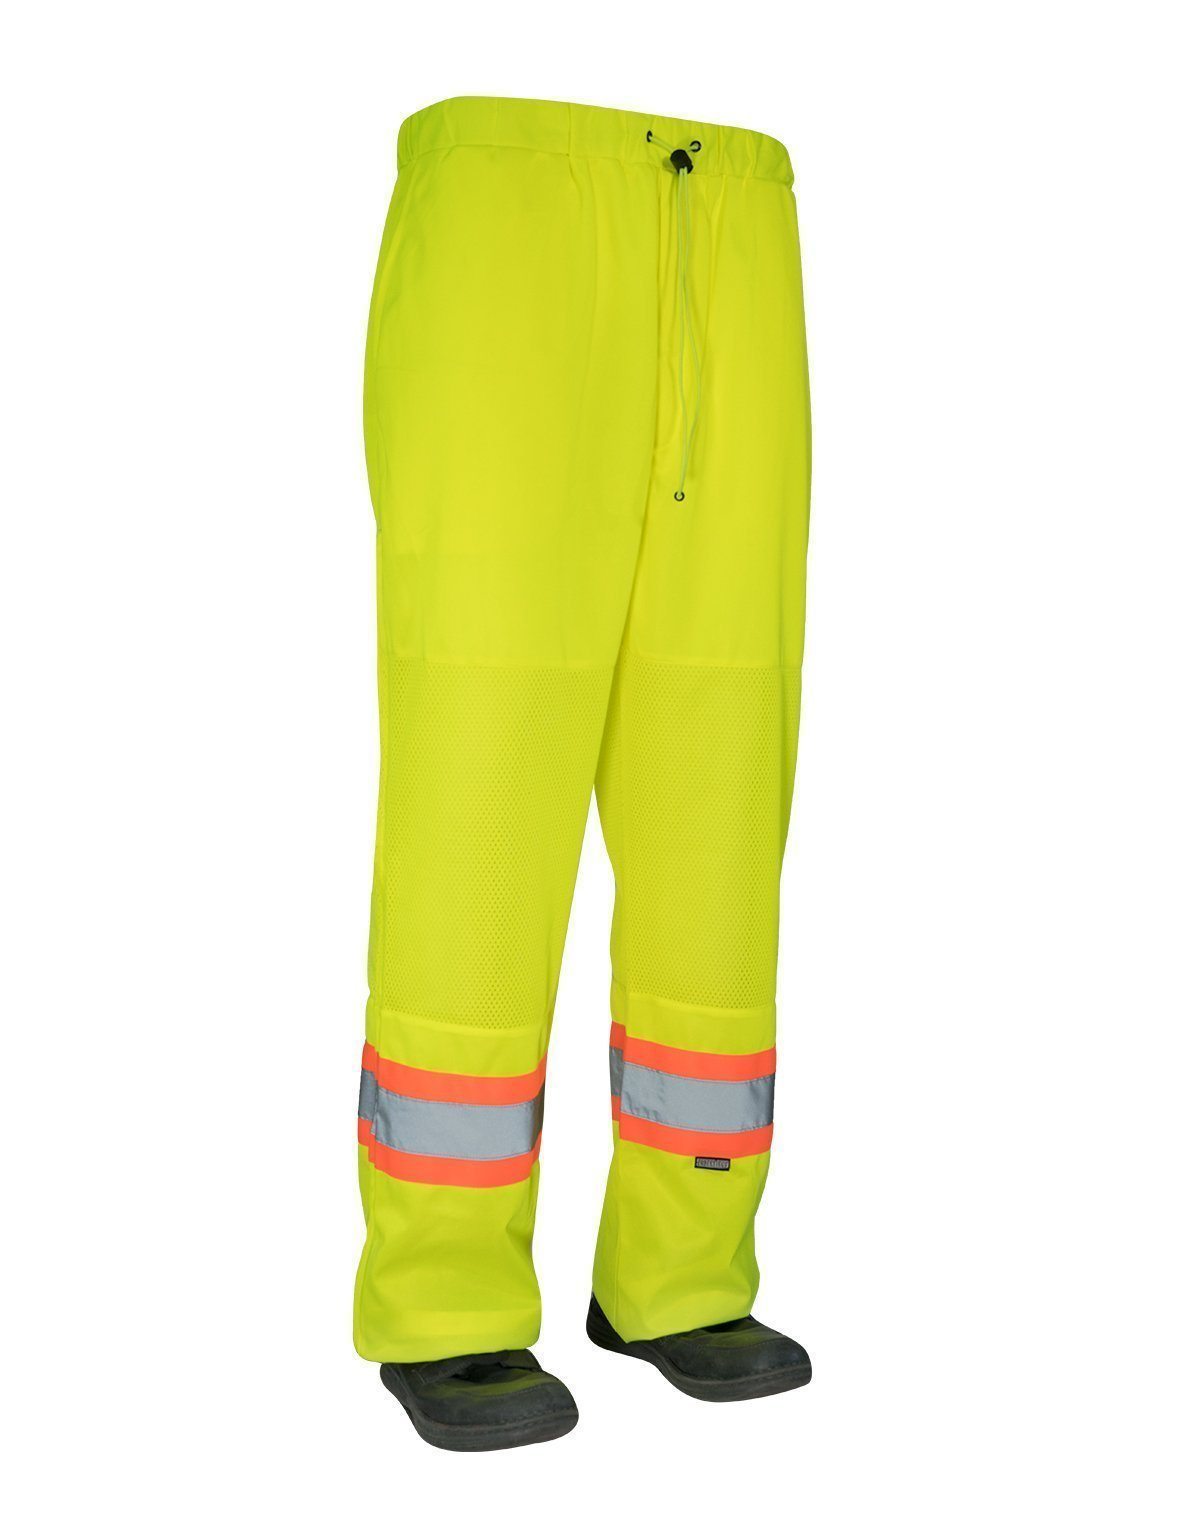 THAMUZ 6 Pocket reflectorized safety pants  Cutton Garments